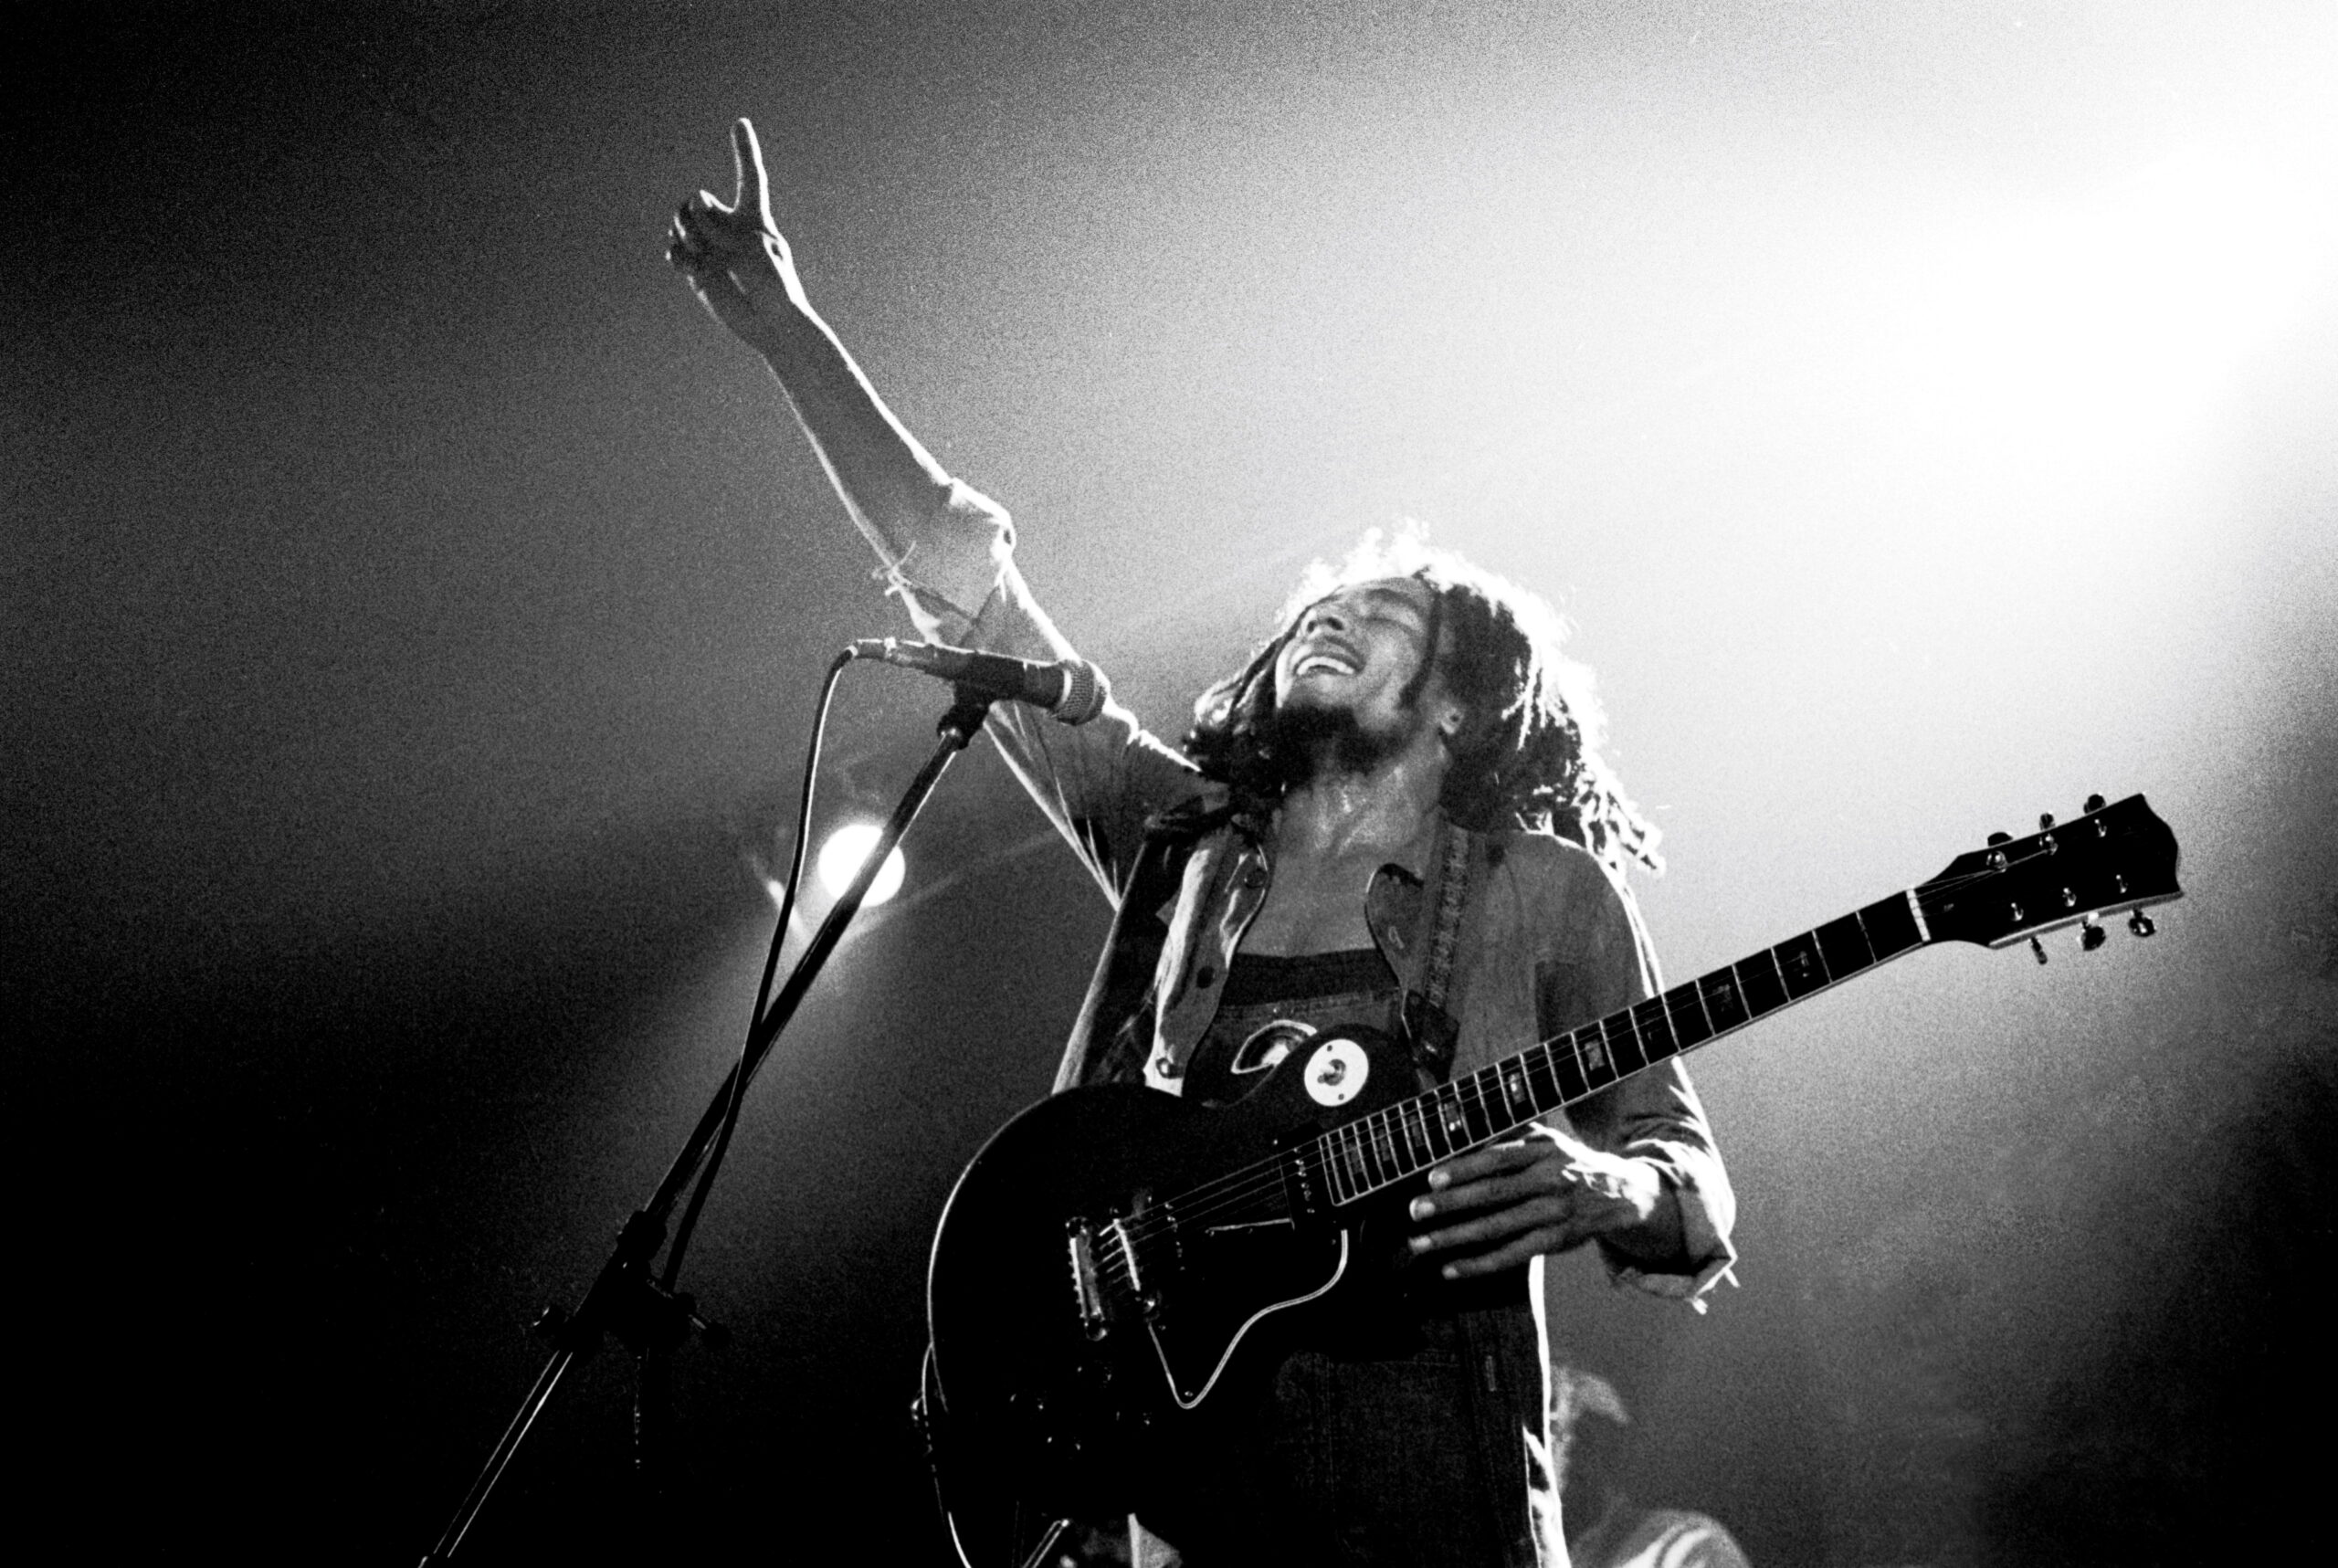 VOORBURG, NETHERLANDS: Bob Marley performs live on stage with the Wailers in Voorburg, Holland in 1976 (Photo Credit: Gijsbert Hanekroot/Redferns)